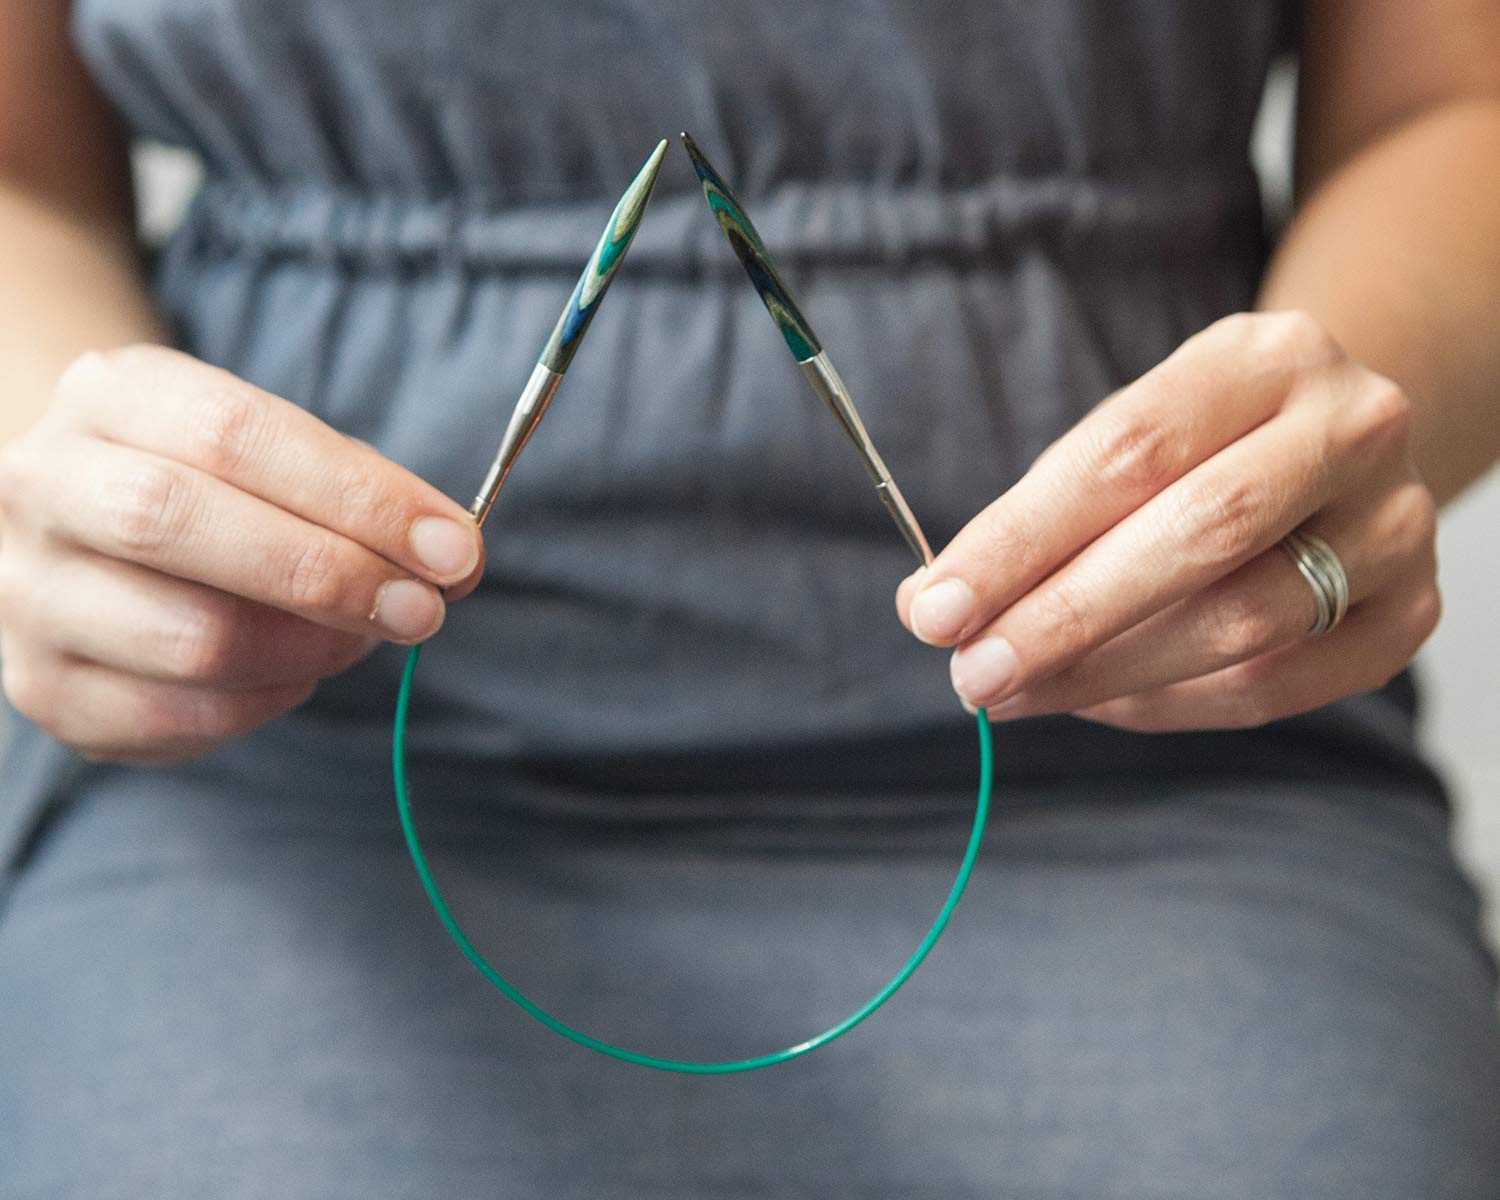 Knitting Needles  Knit Picks Caspian Interchangeable Tips